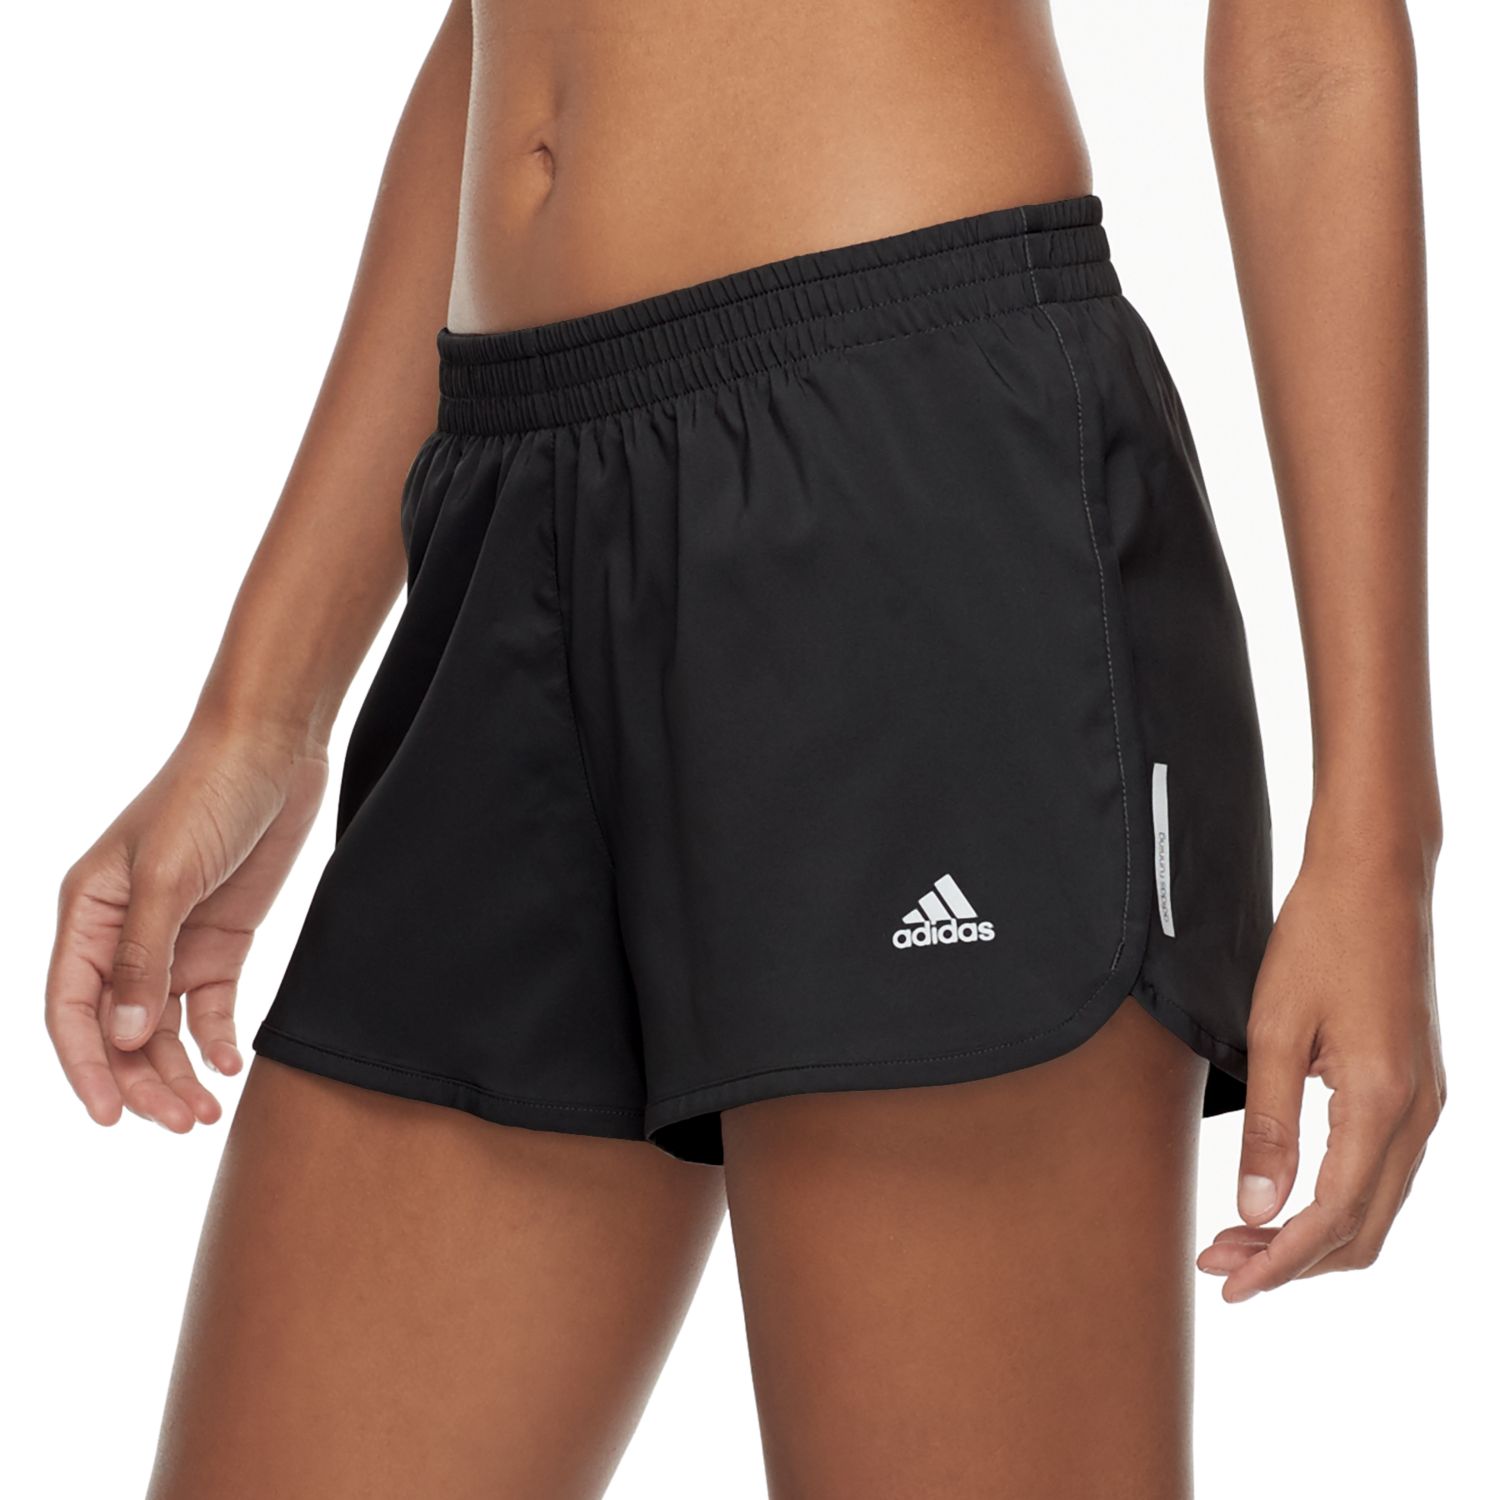 adidas black womens shorts